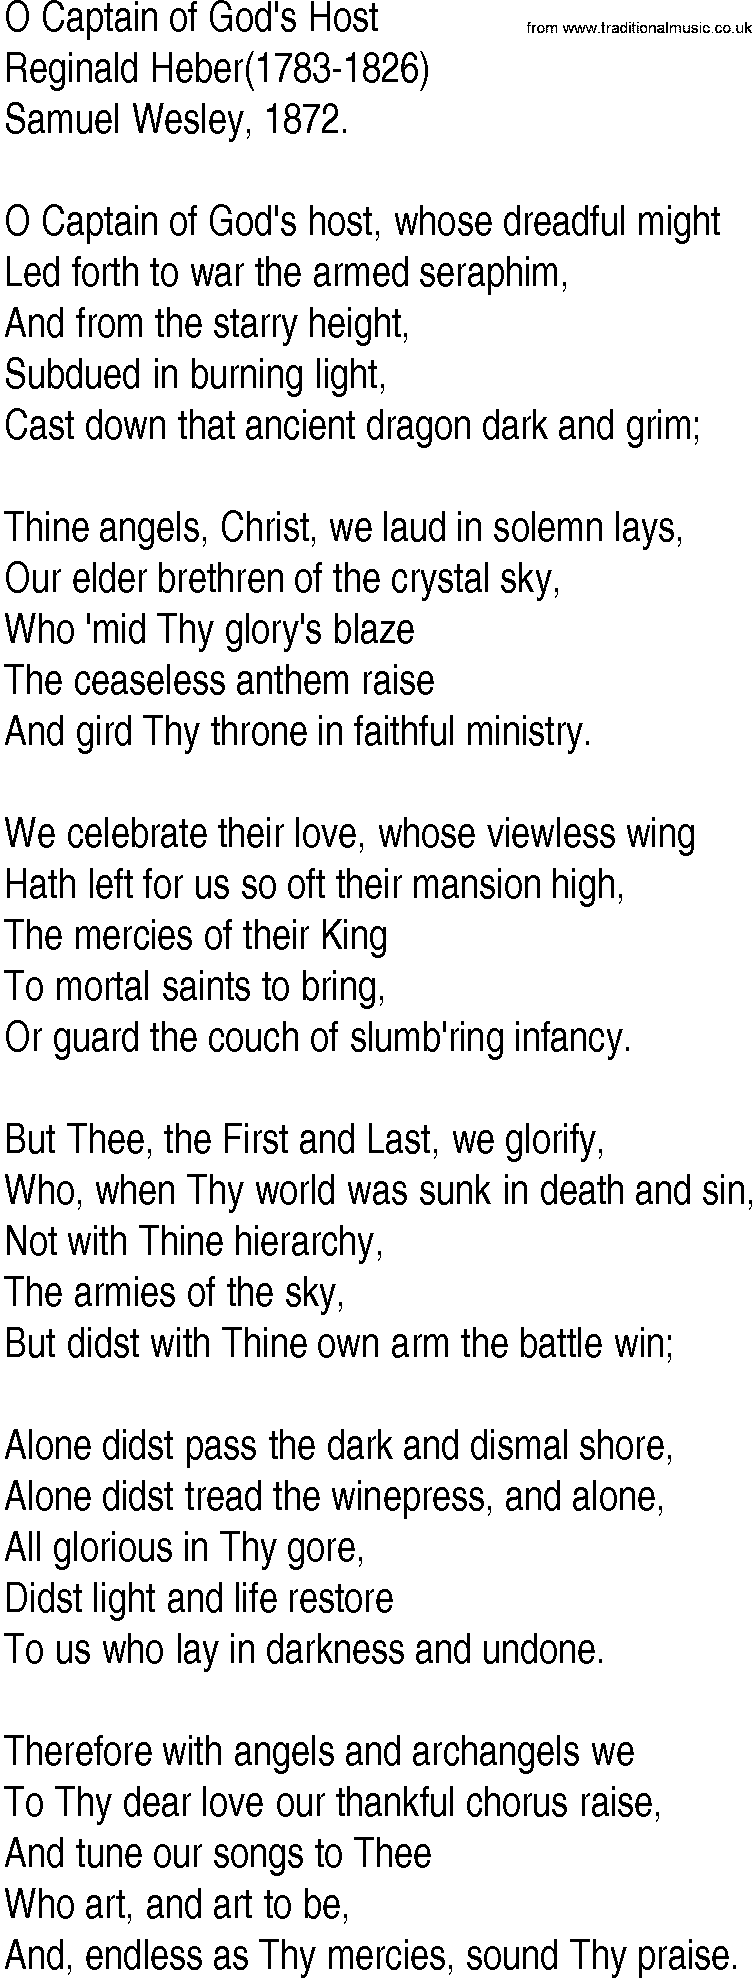 Hymn and Gospel Song: O Captain of God's Host by Reginald Heber lyrics